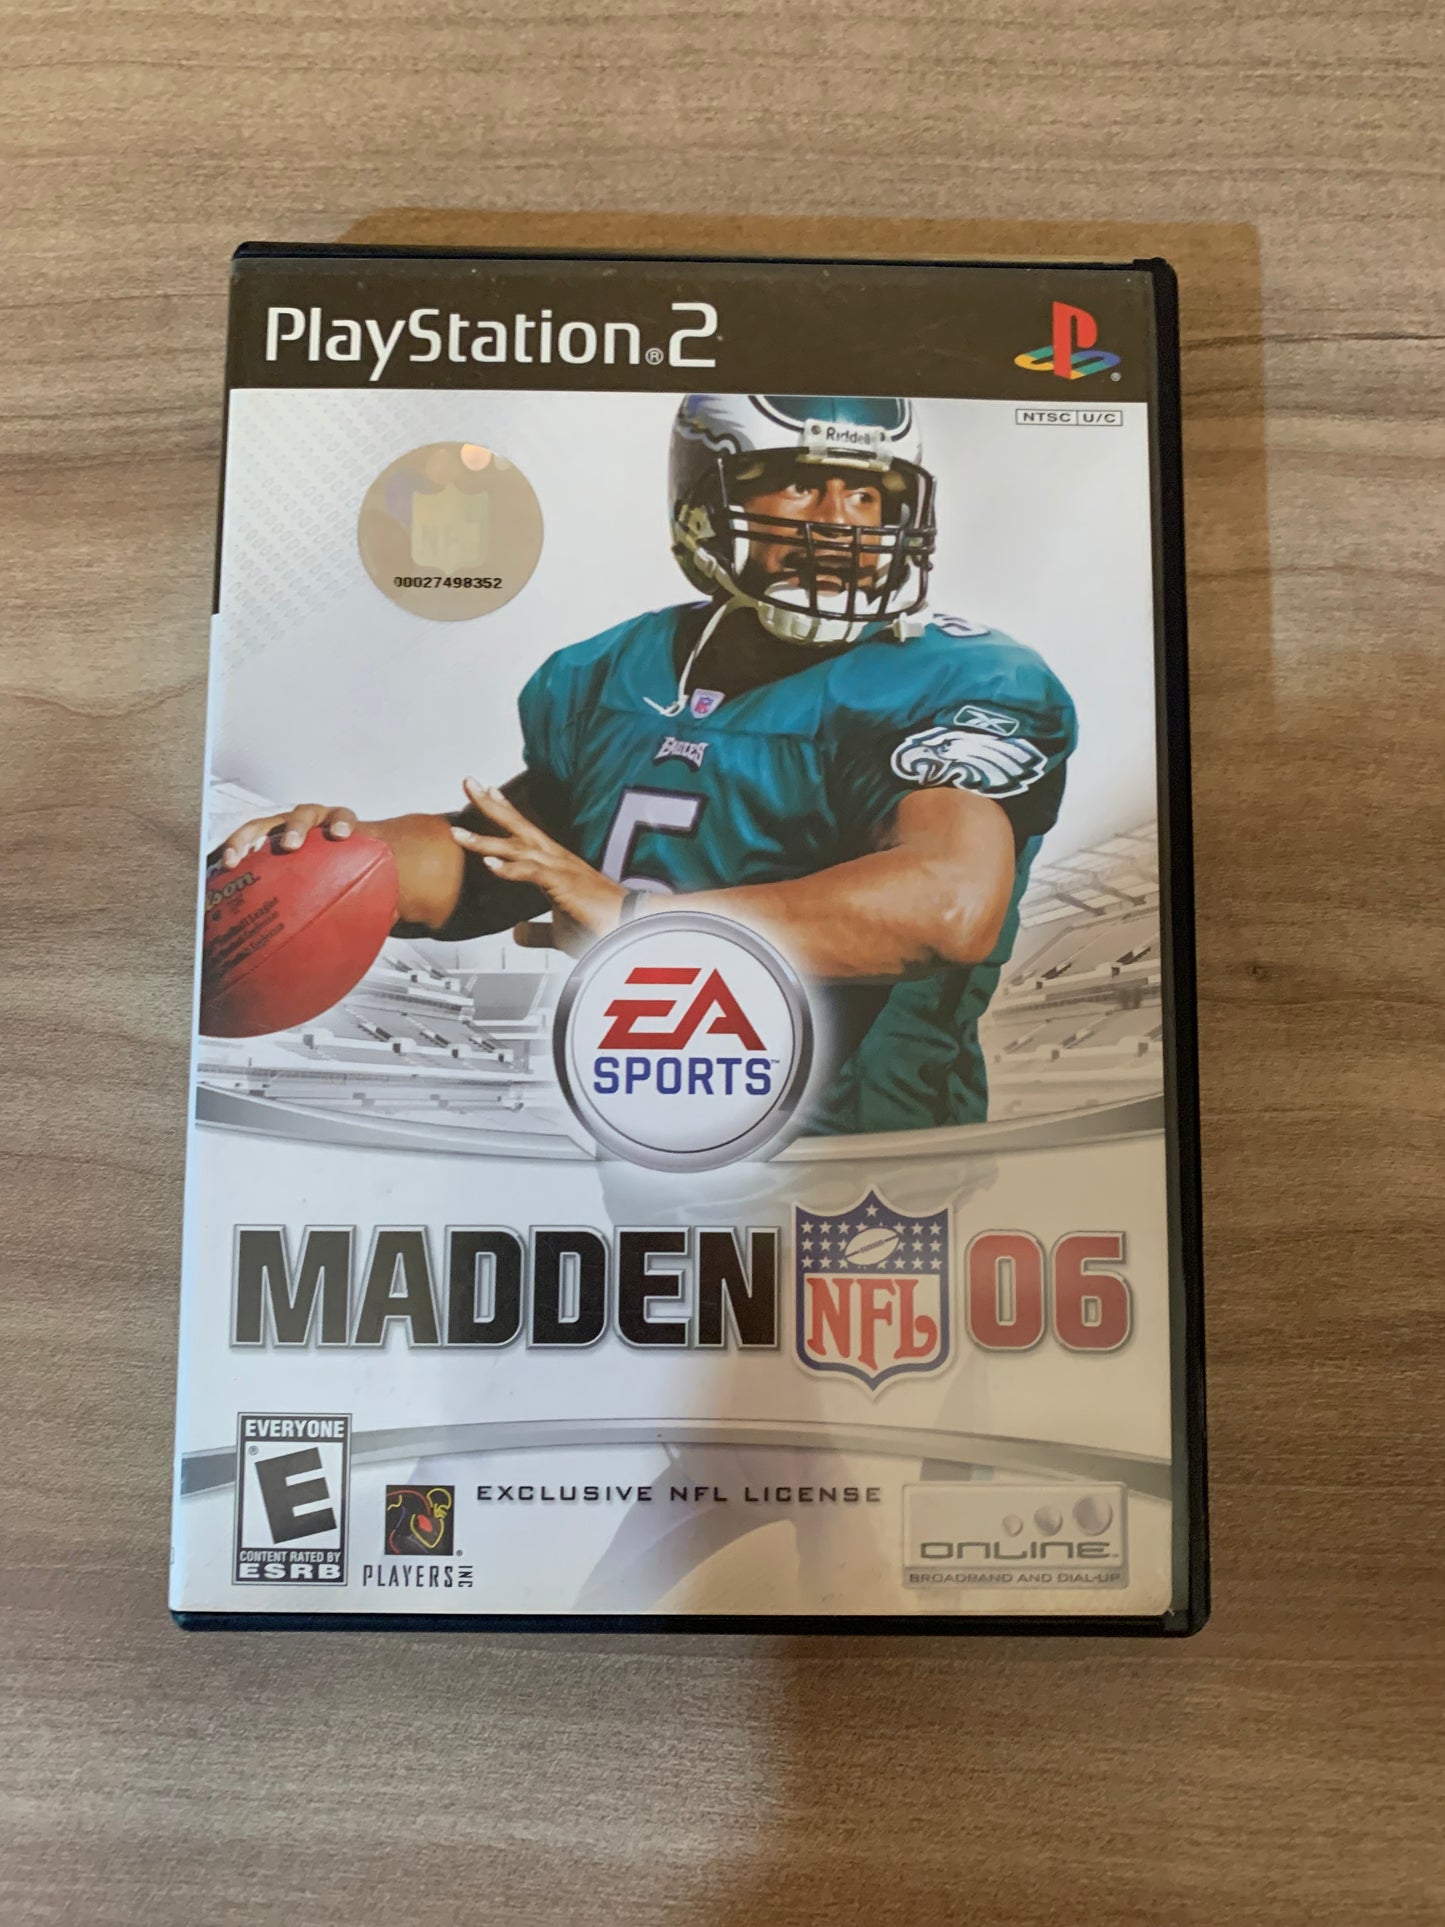 SONY PLAYSTATiON 2 [PS2] | MADDEN NFL 06